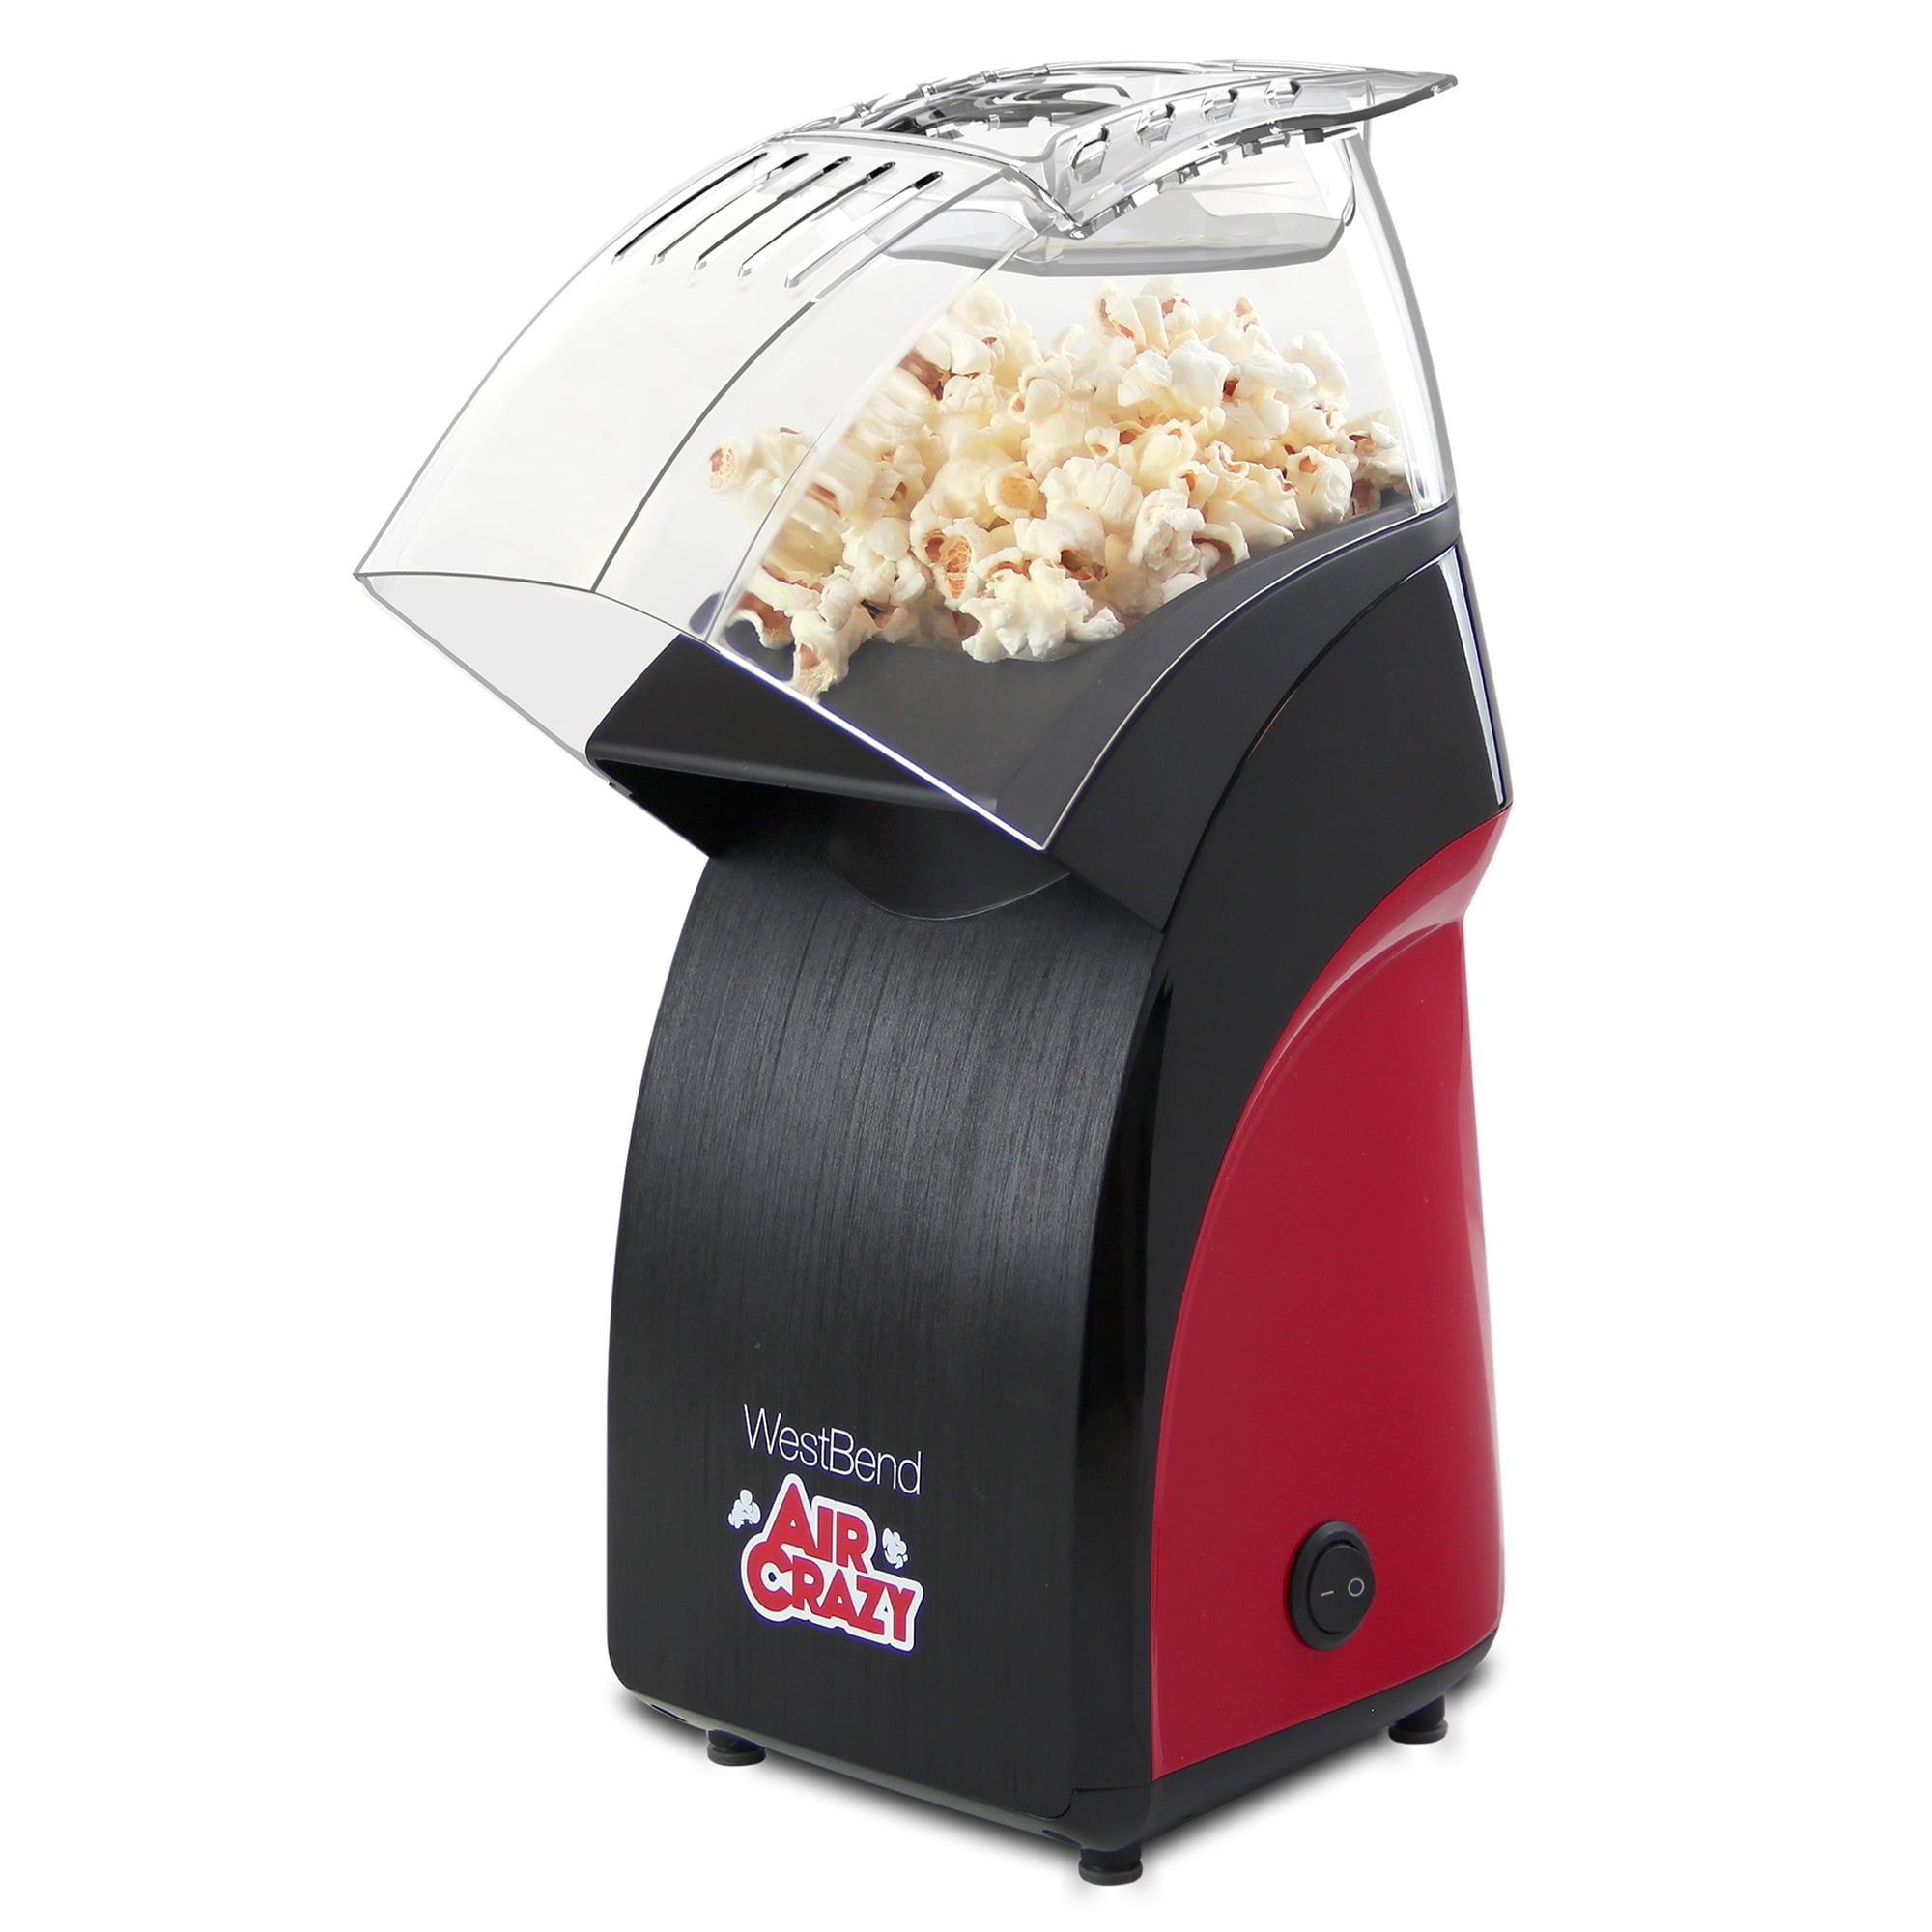  1200W Fast Hot Air Popcorn Popper - 4.5 Quarts